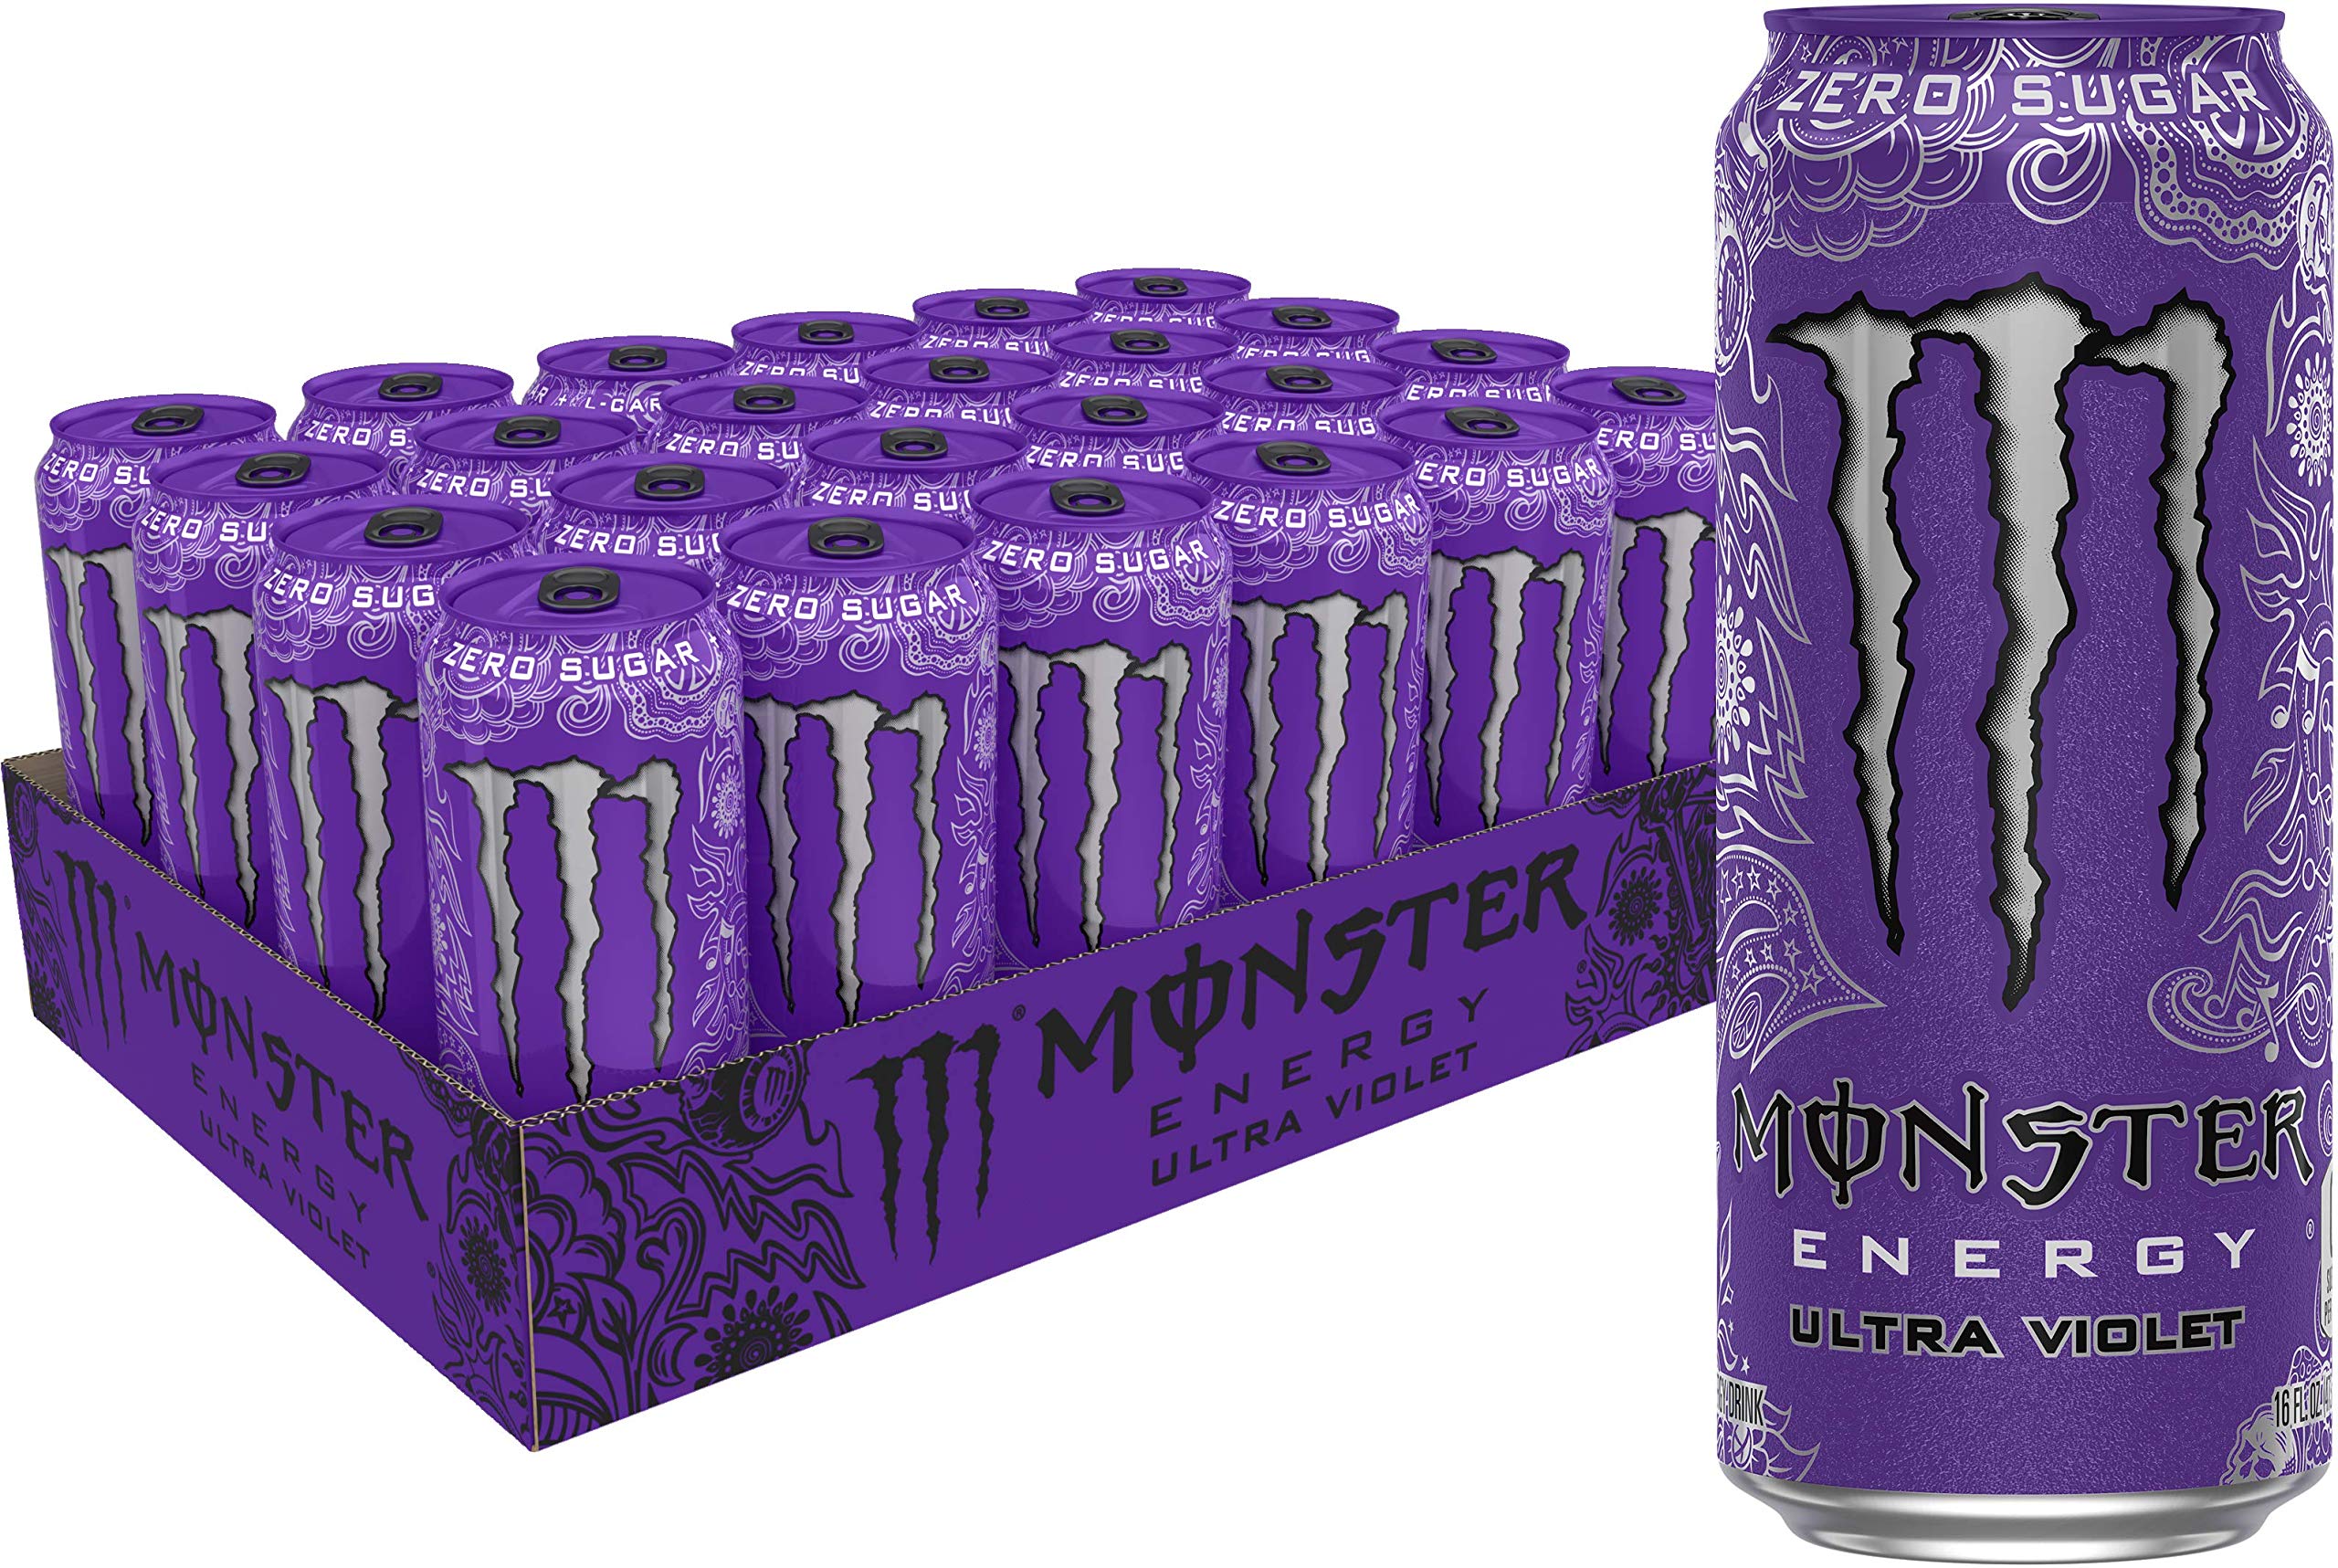 what does ultra violet monster taste like